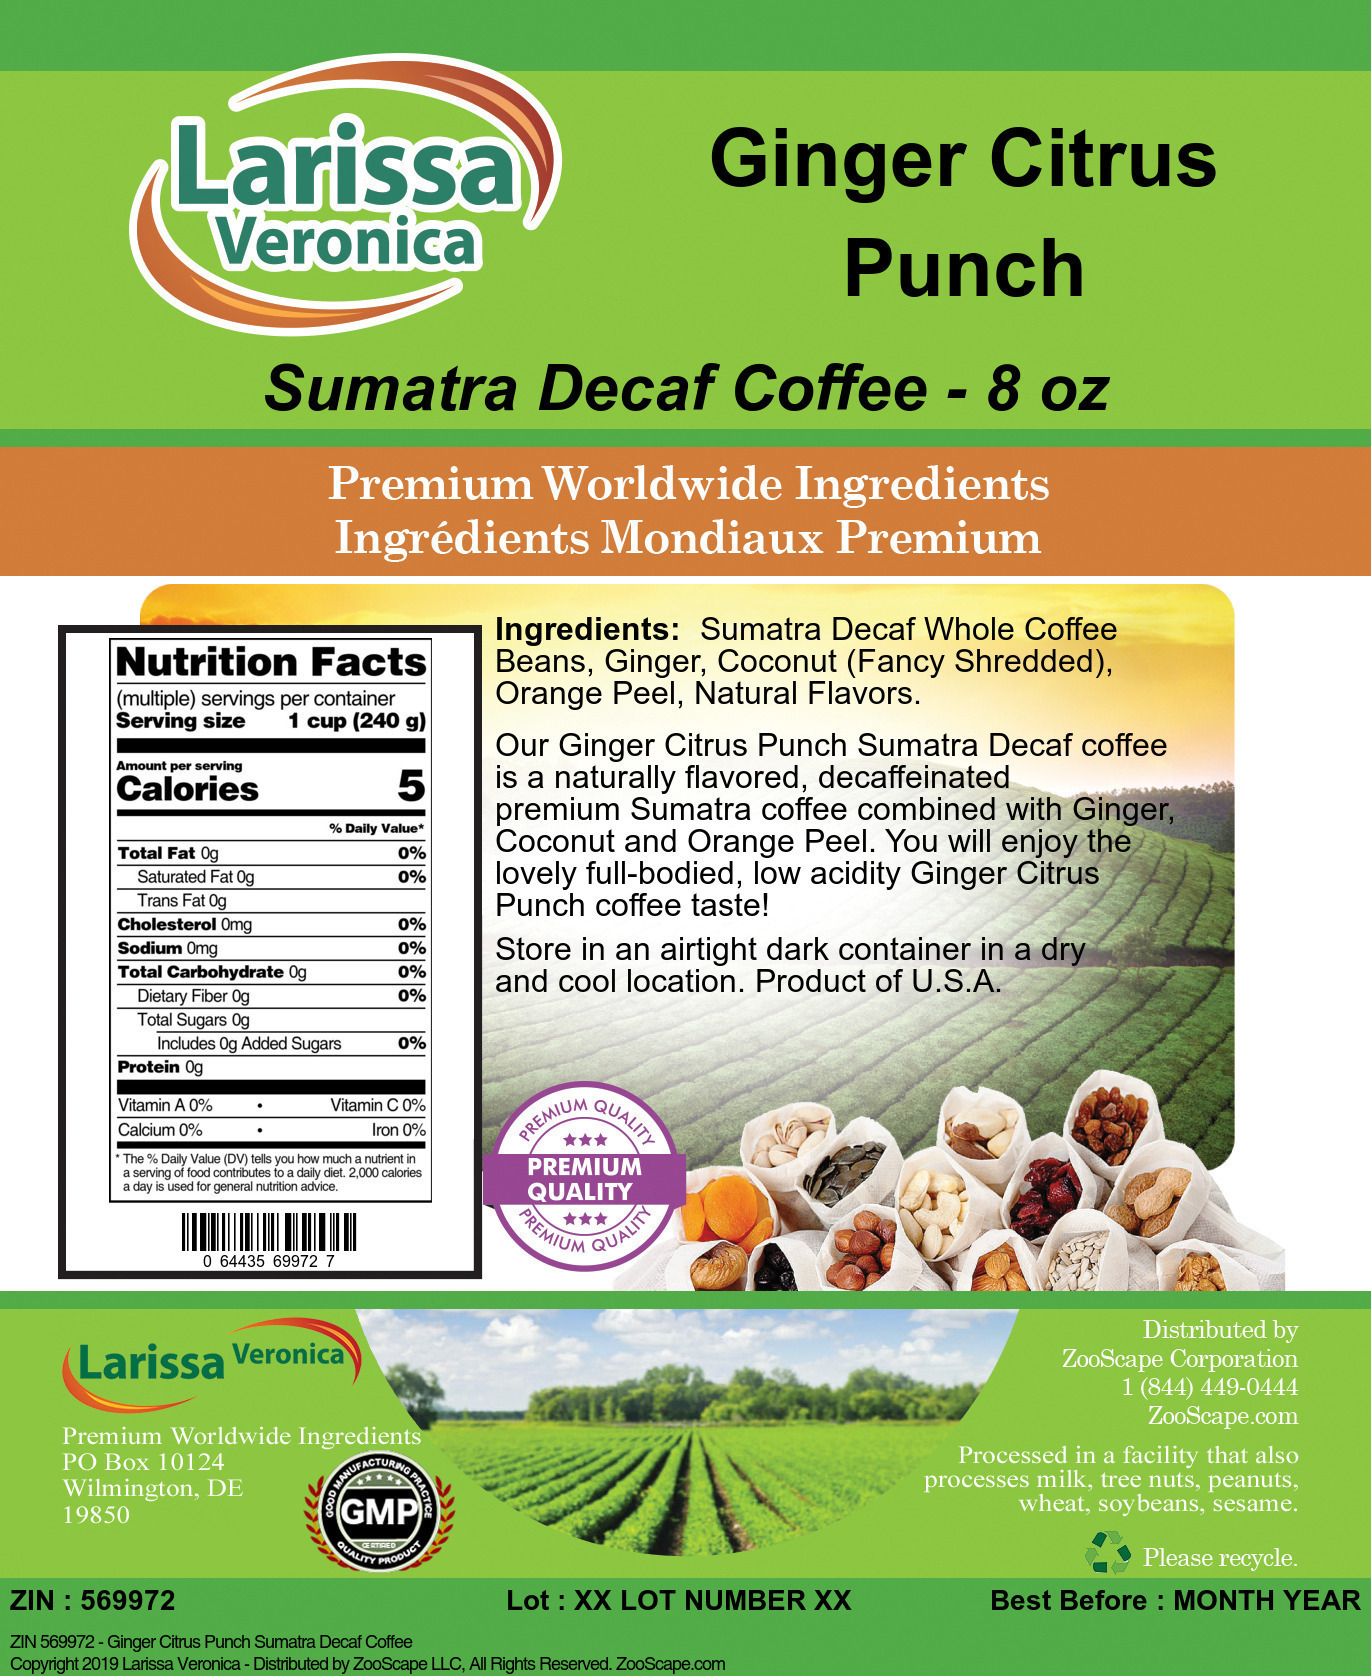 Ginger Citrus Punch Sumatra Decaf Coffee - Label